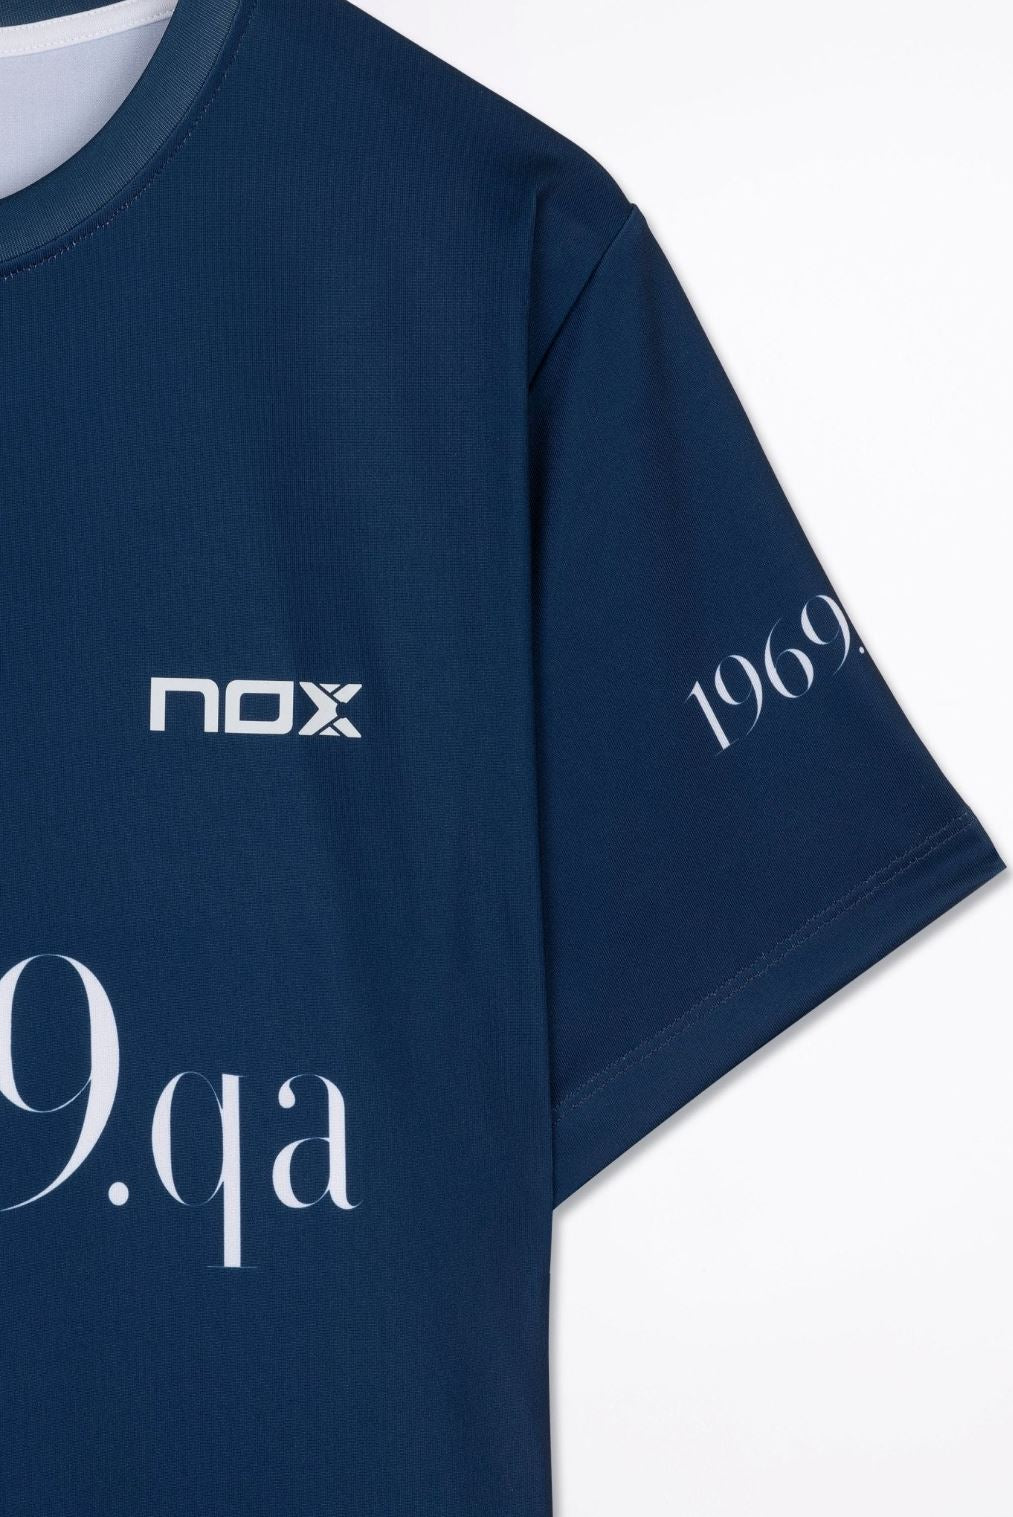 Nox Agustin Tapia Official Padel T-Shirt 2022/23 (Navy Blue)